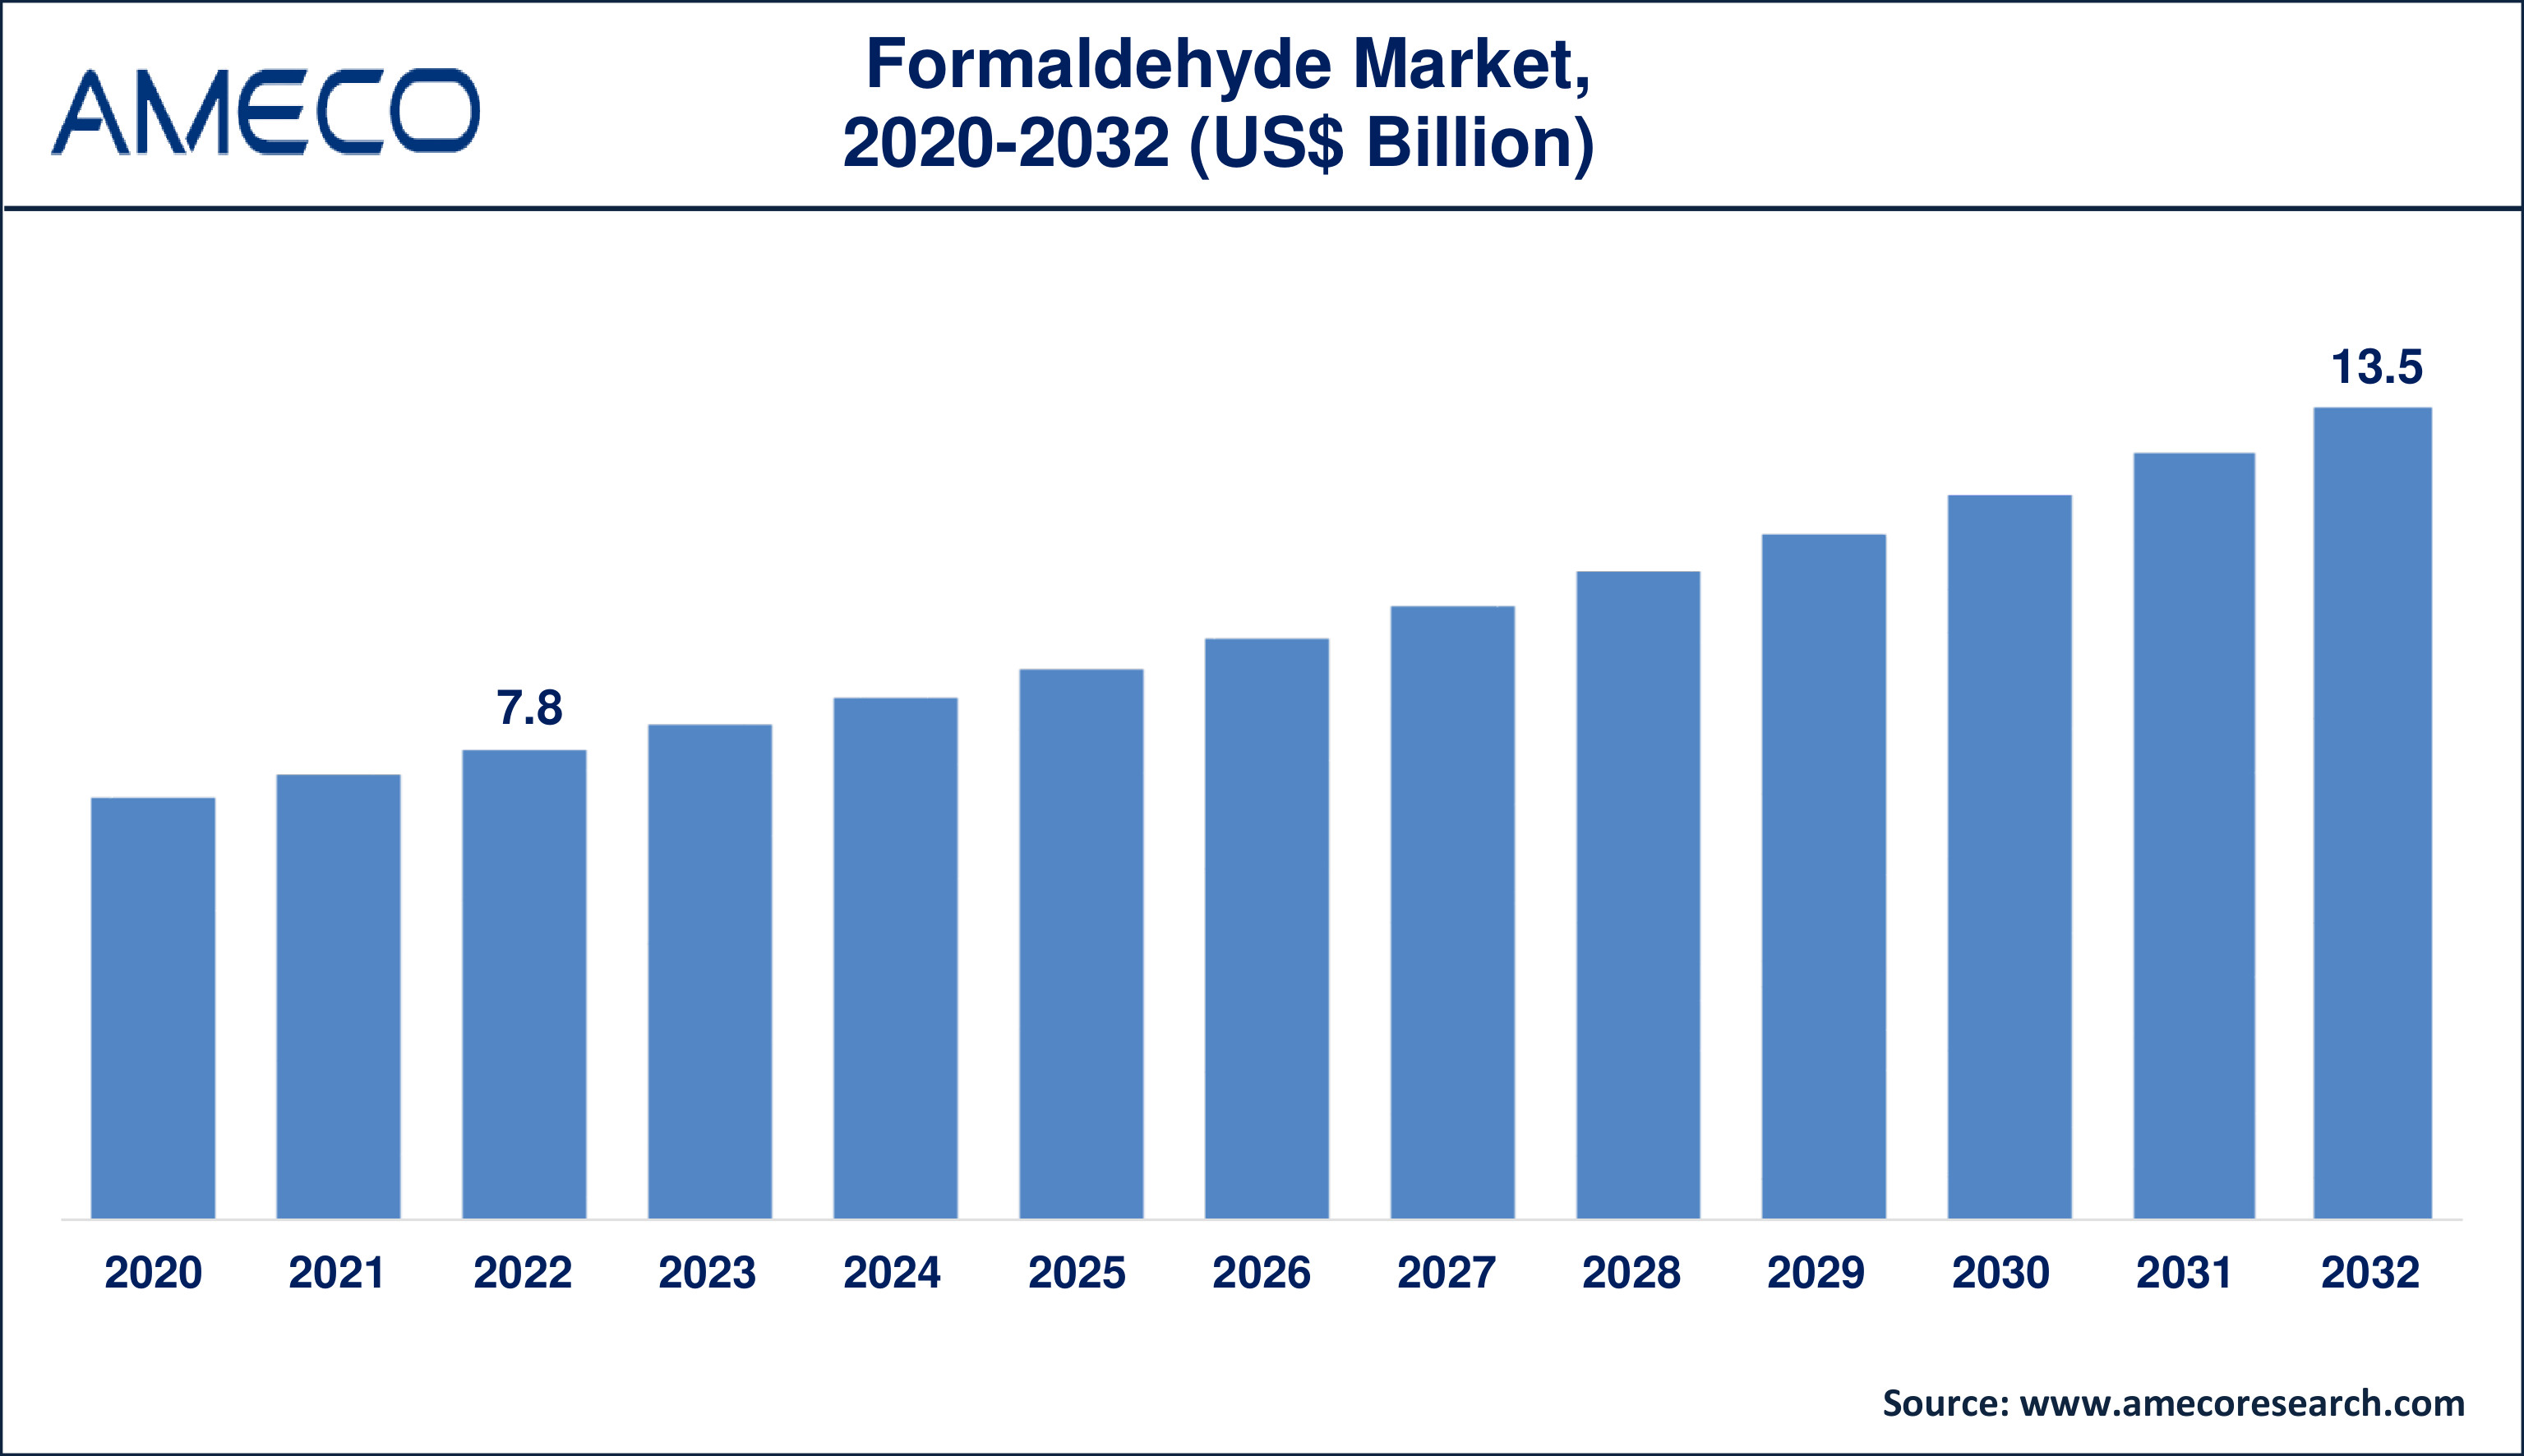 Formaldehyde Market Dynamics